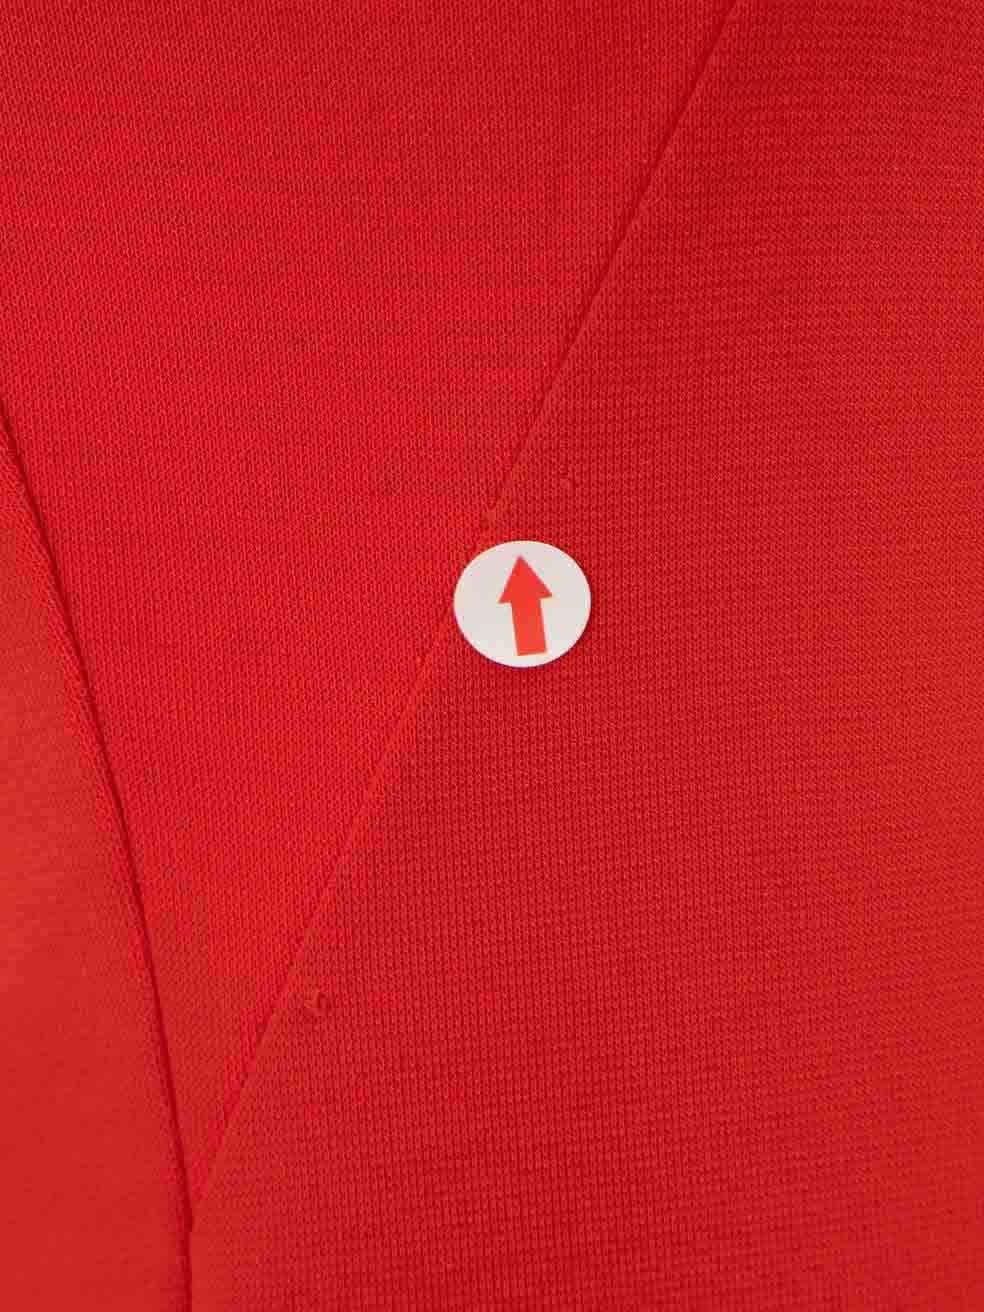 Philipp Plein Red Sleeveless Flared Mini Dress Size M For Sale 3